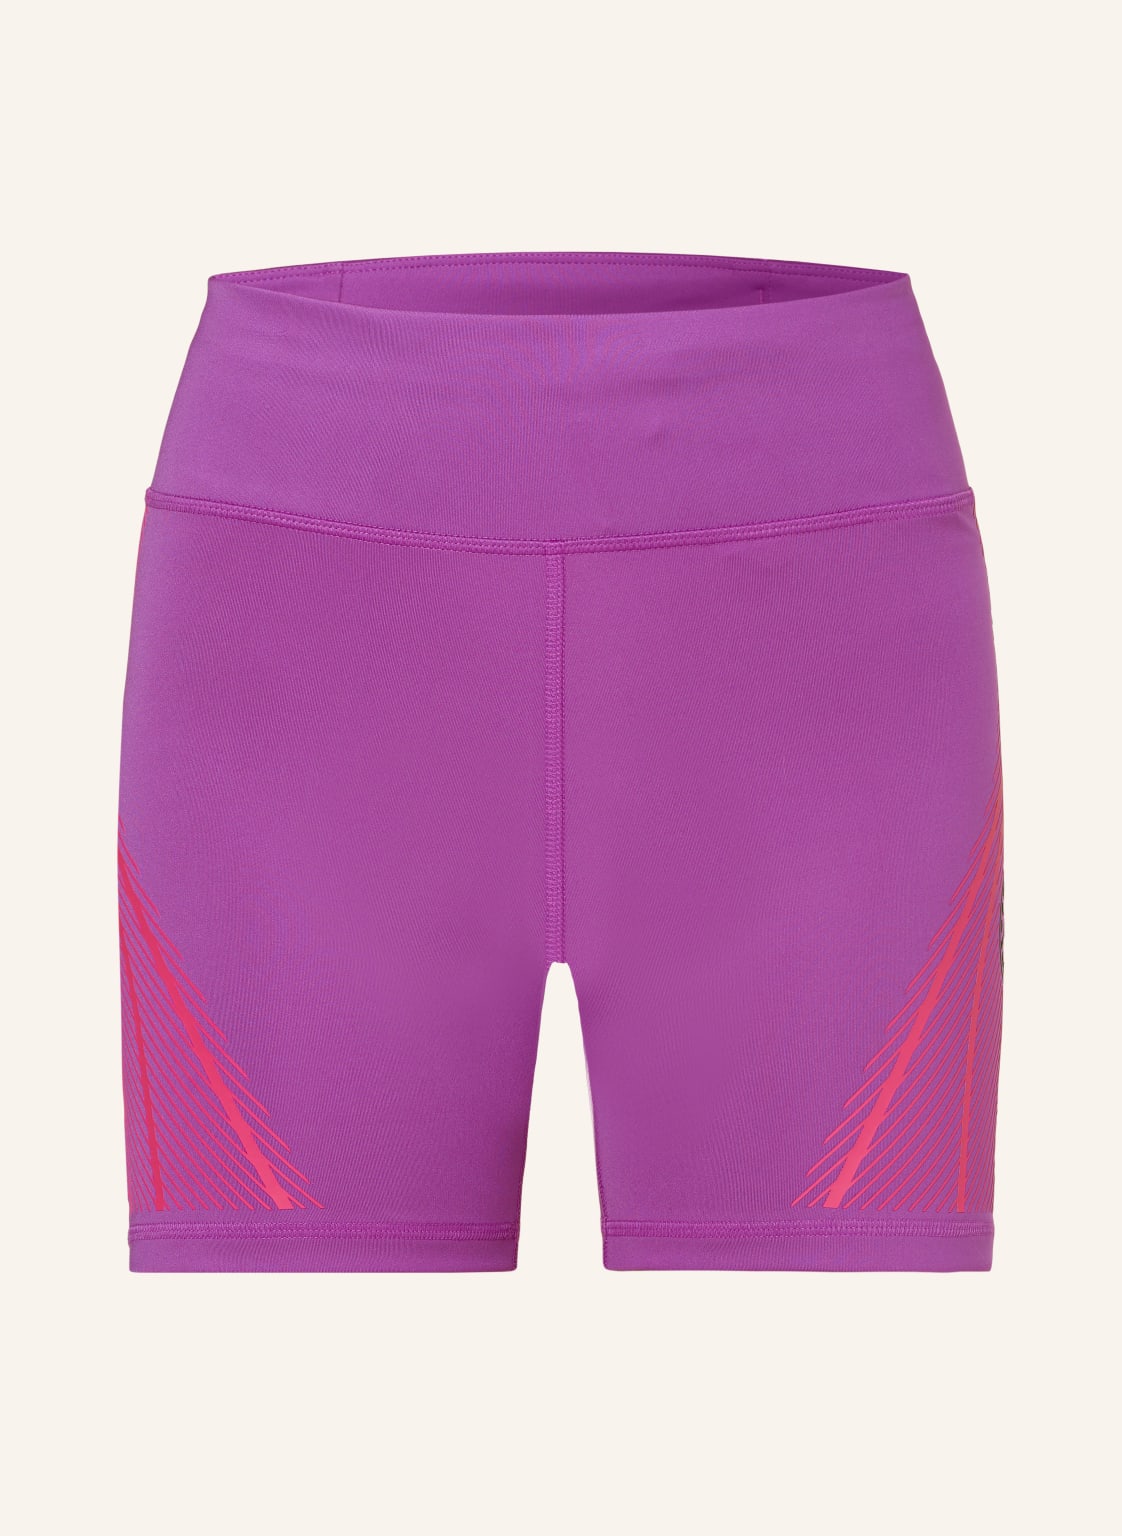 Adidas By Stella Mccartney Tights Truepace pink von adidas by stella mccartney